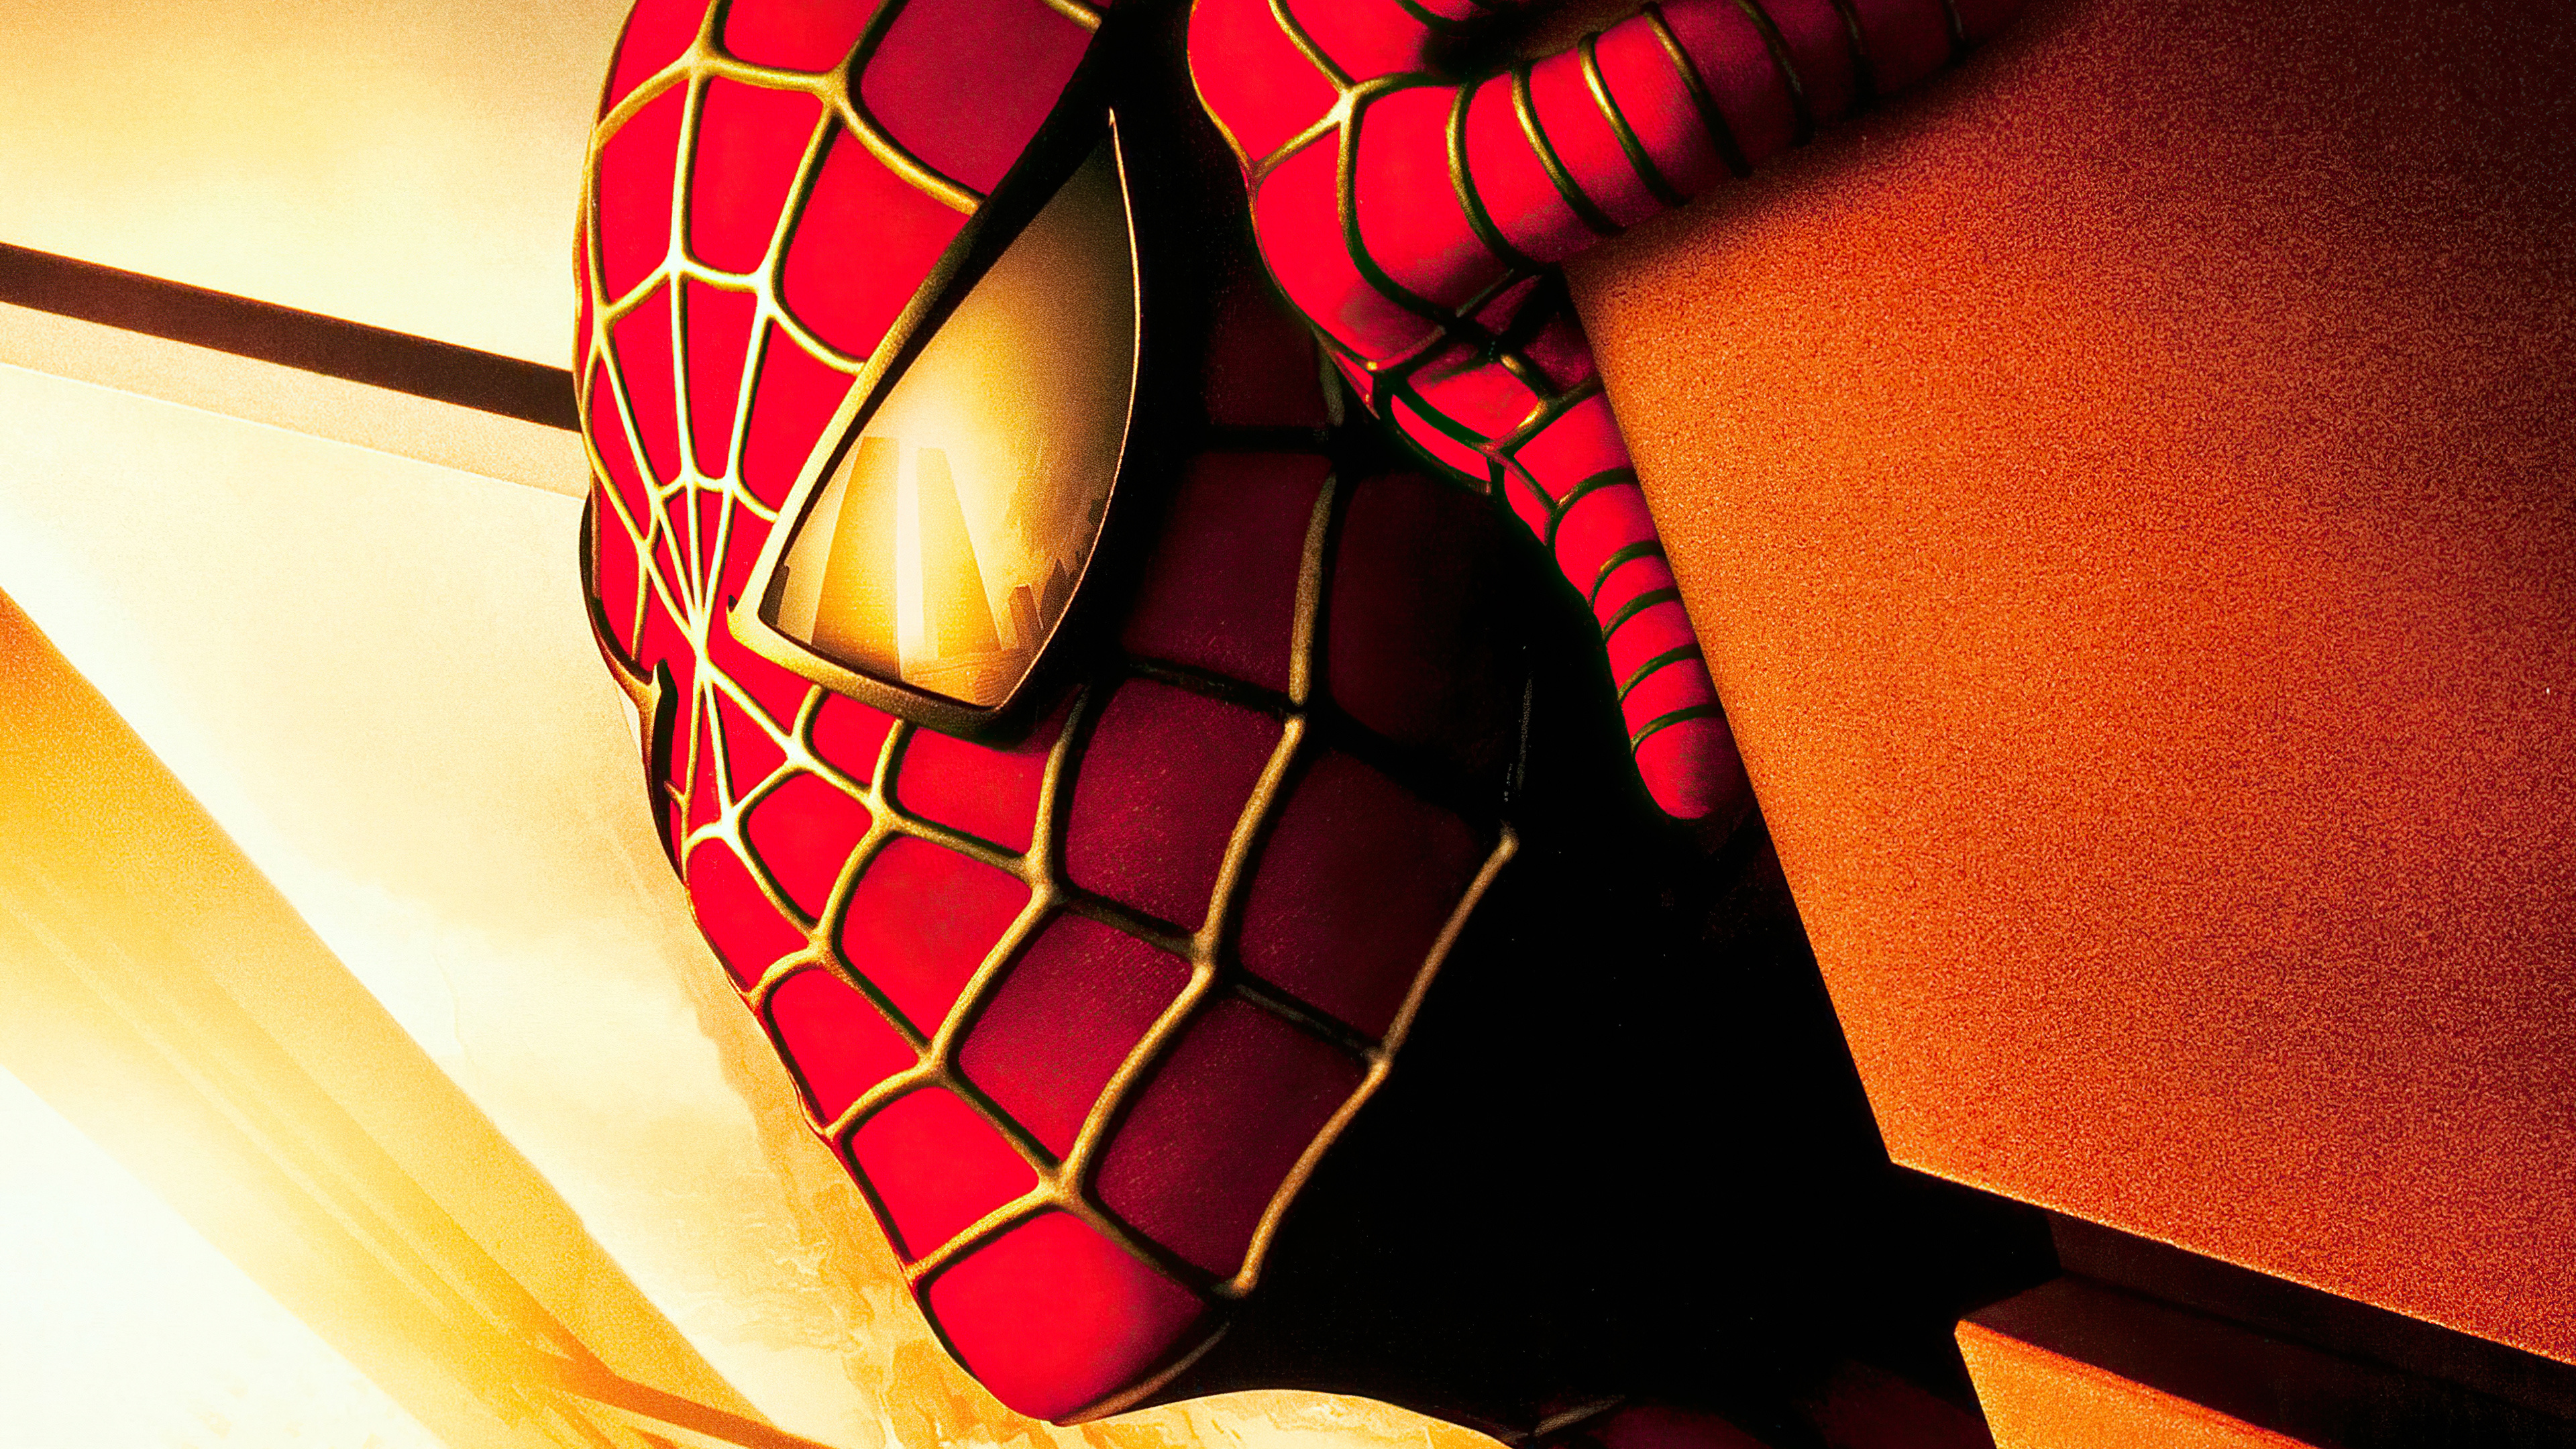 HD wallpaper, Desktop 4K Spider Man Tobey Maguire Wallpaper, 4K Ultra Hd Wallpaper, 3840X2160 4K Desktop, Peter Parker, Spectacular Visuals, Tobey Maguire